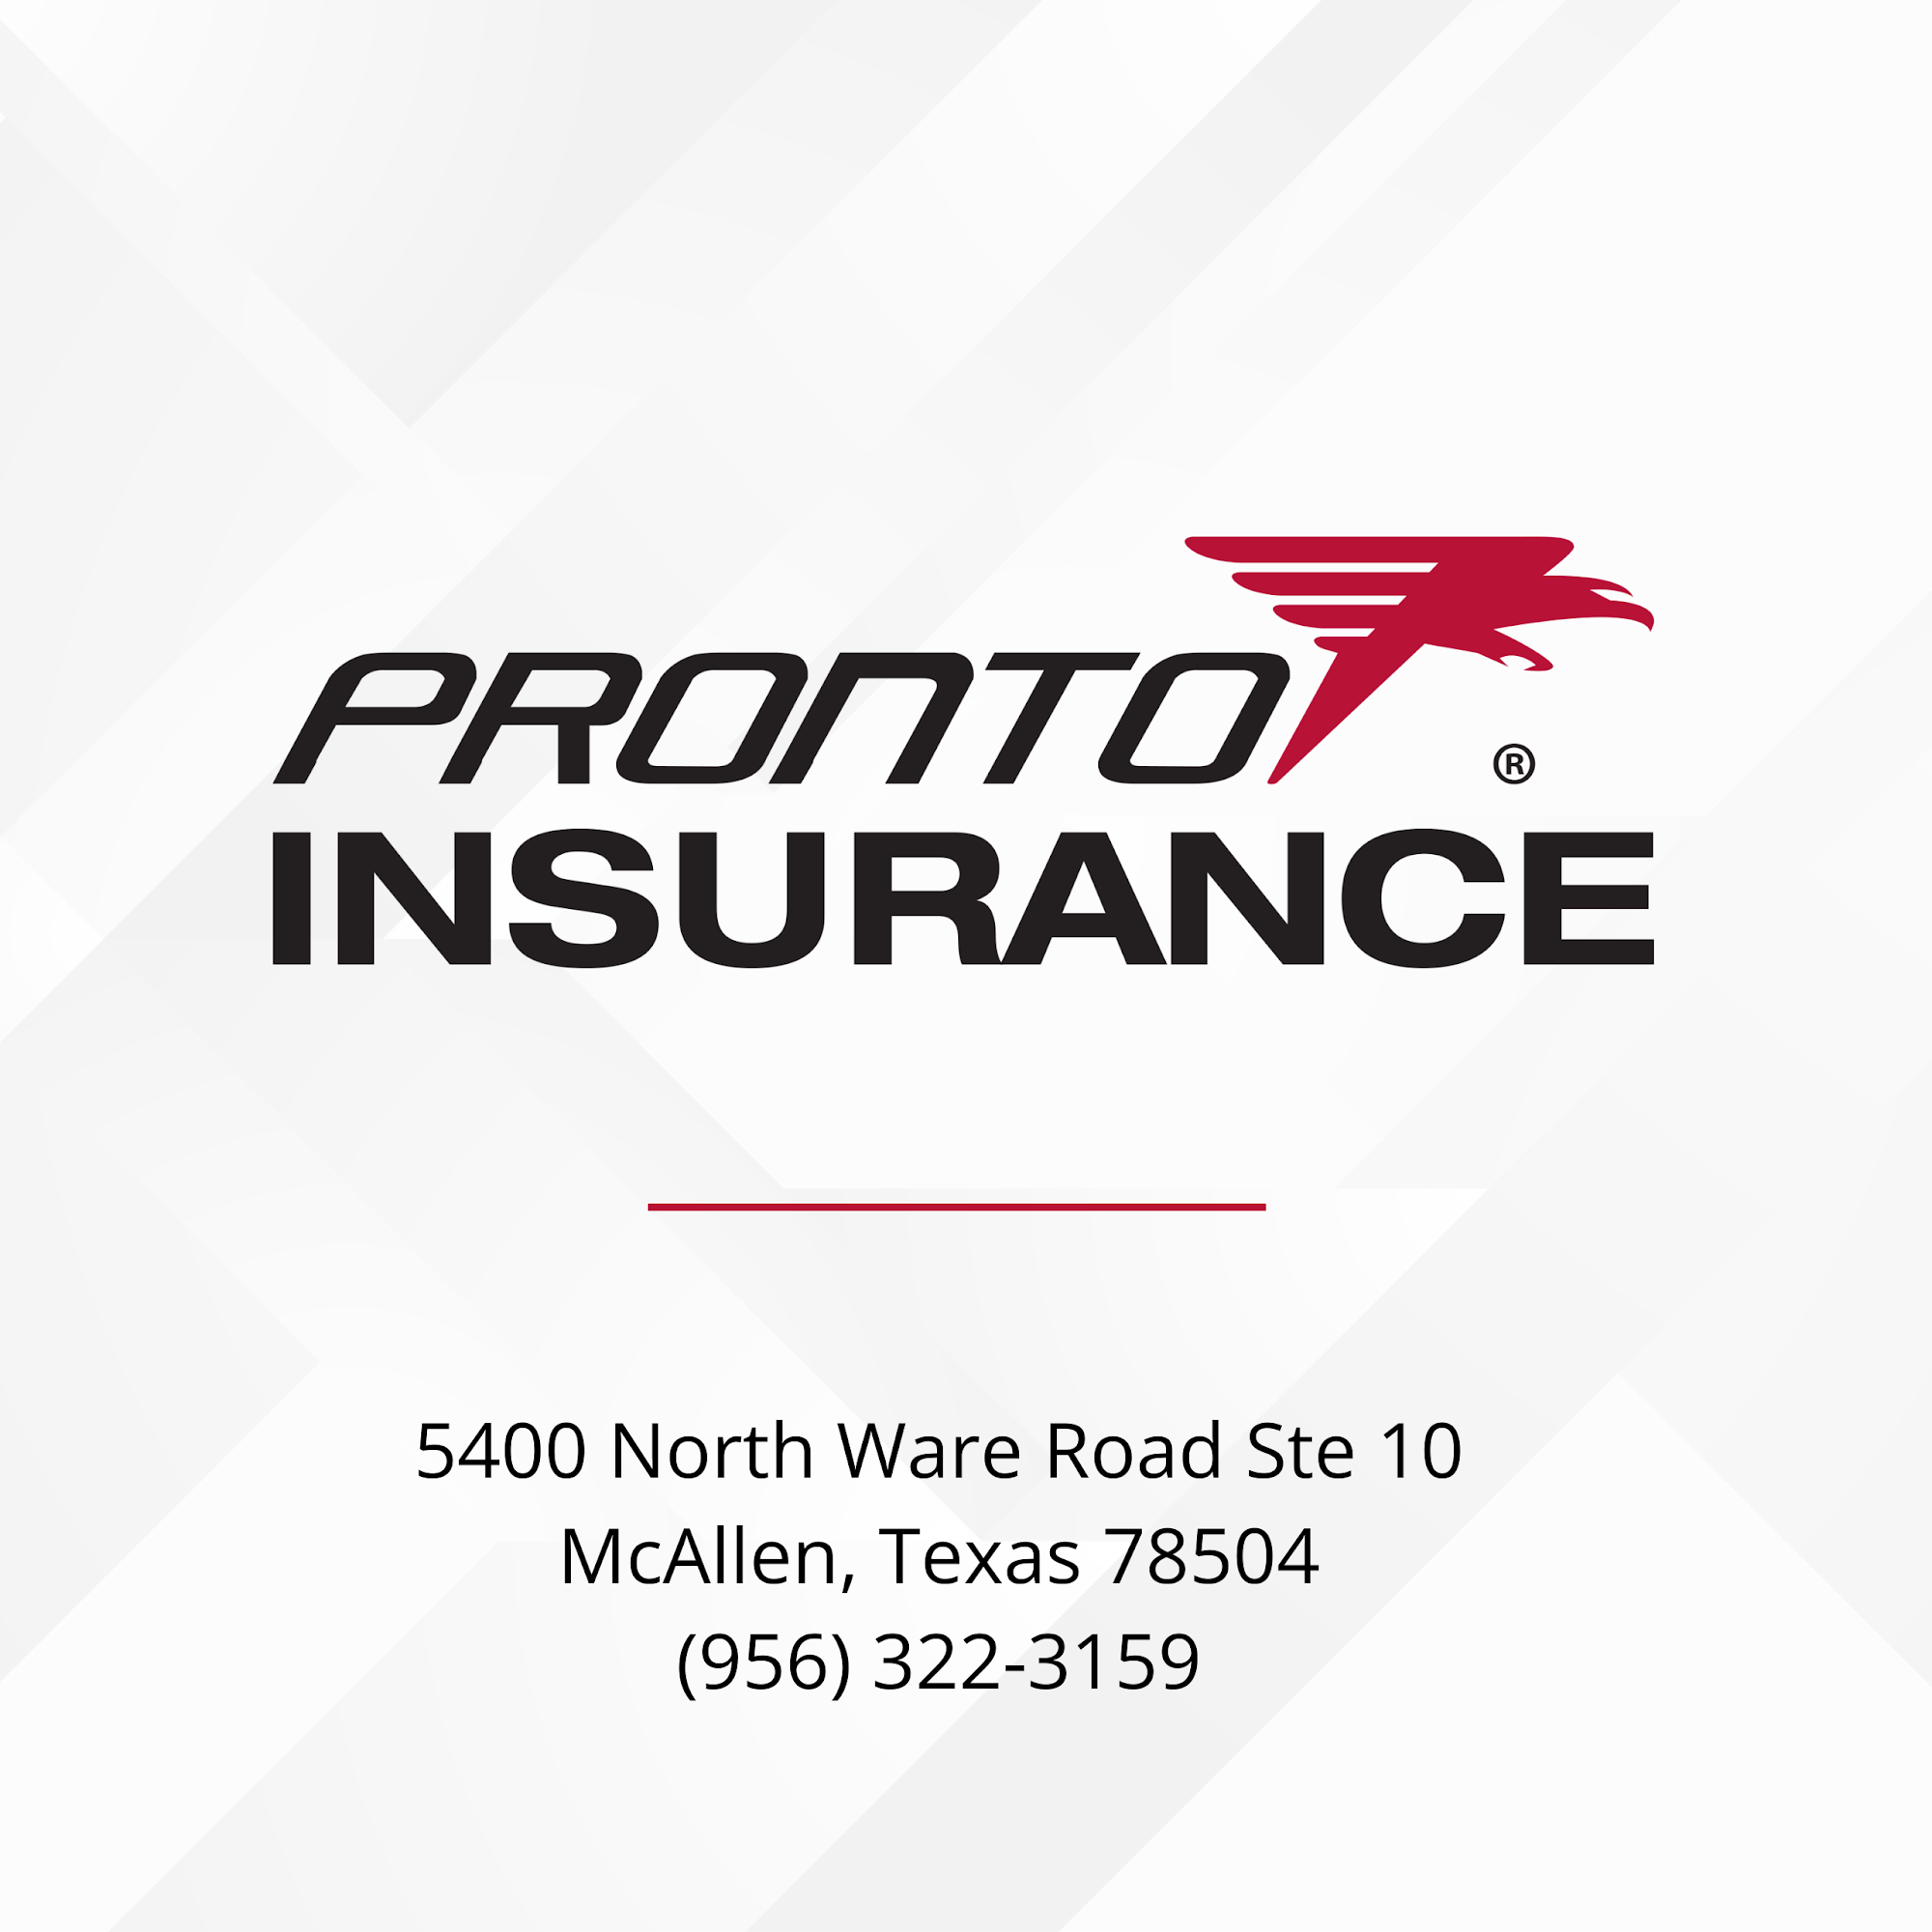 Pronto Insurance